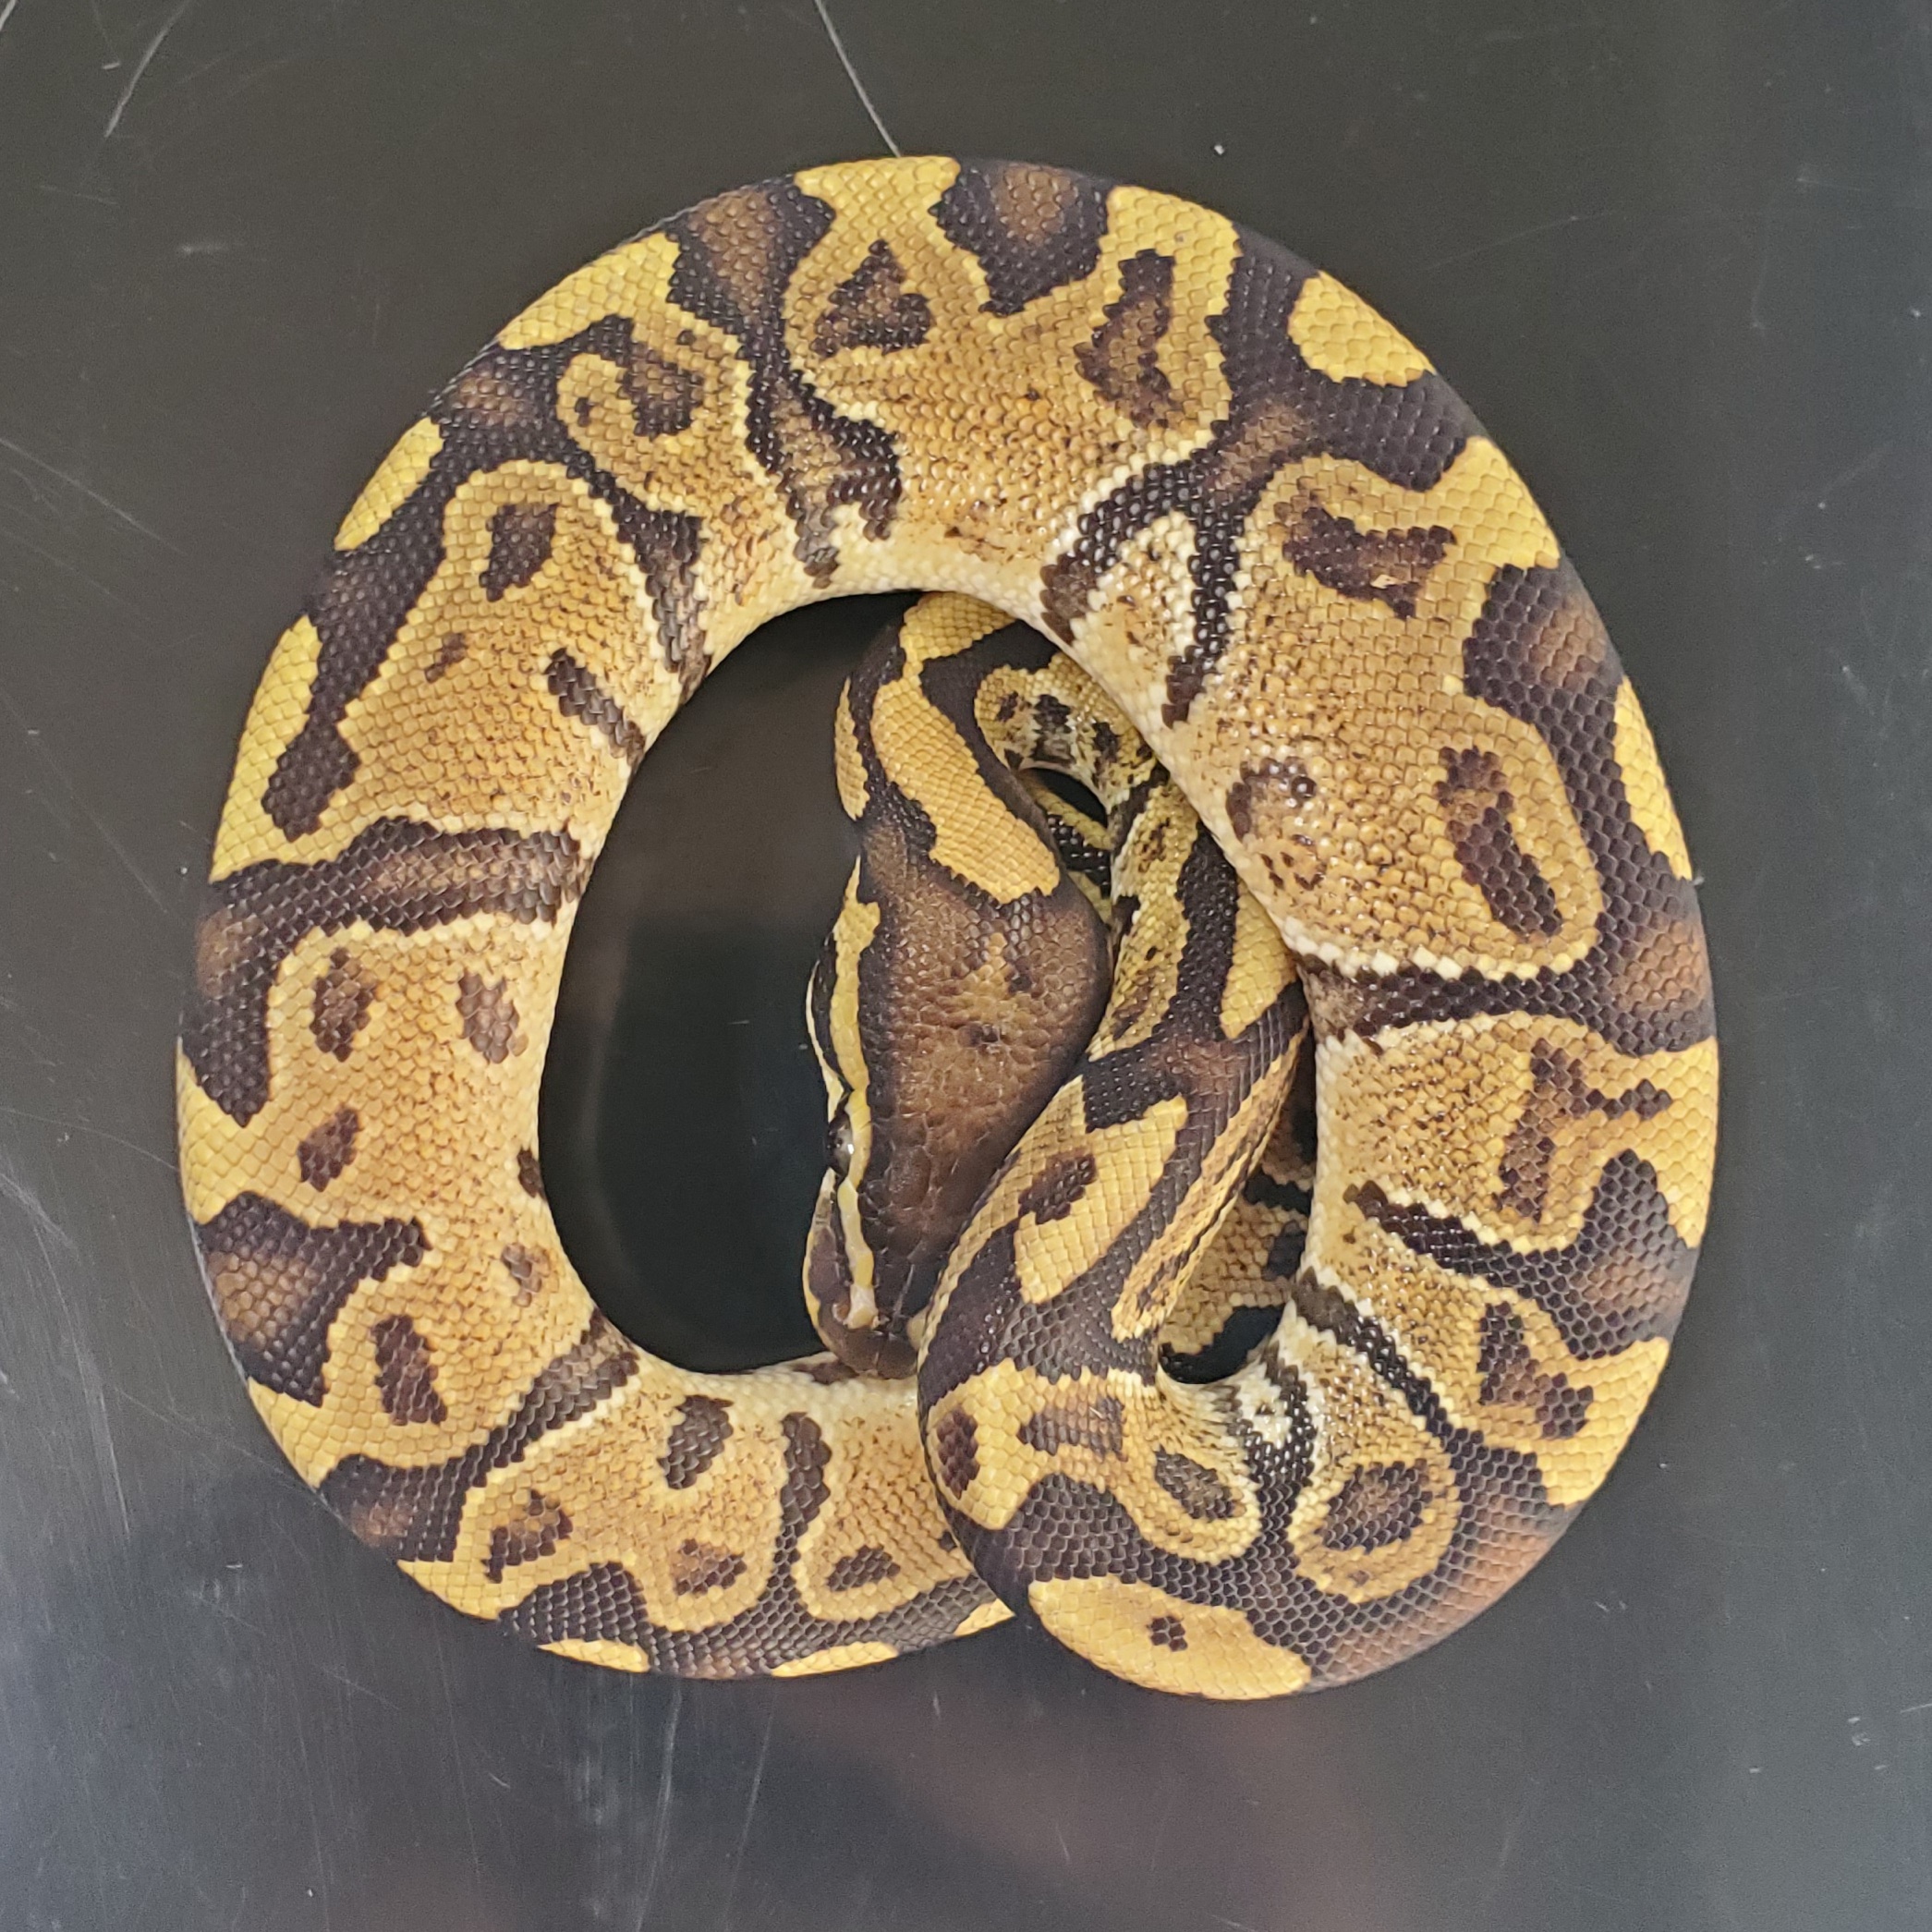 Lemonback Ball Python by Terra-Fauna Exotics